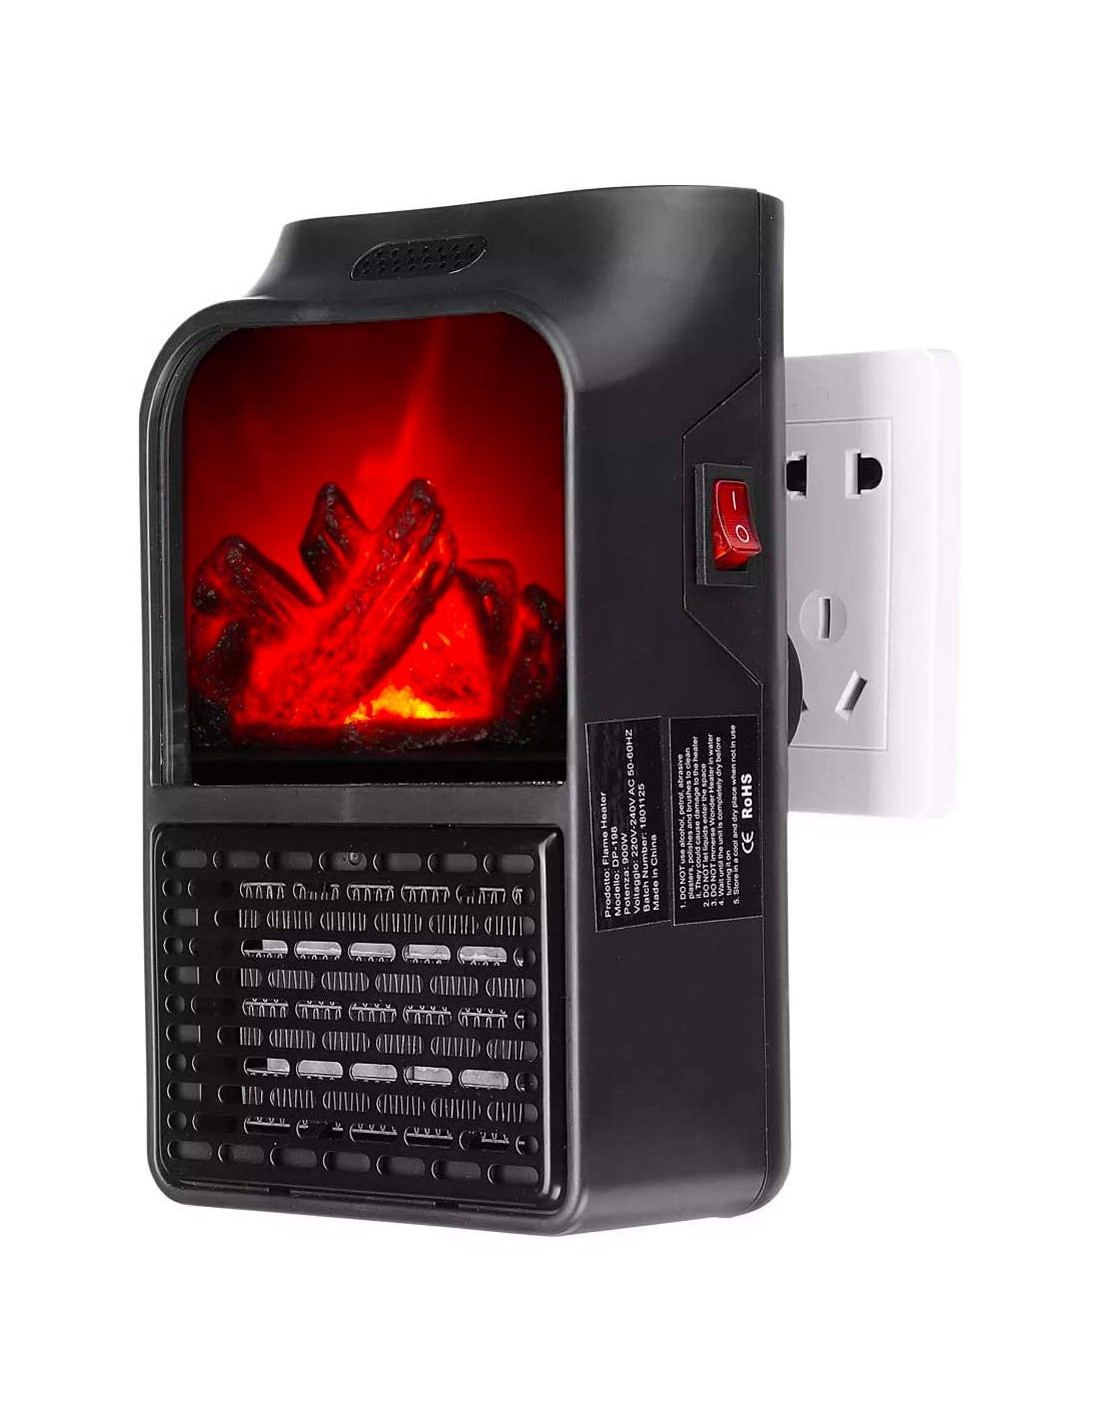 Mini stufa portatile stufetta Wonder Heater 900 w spina presa muro elettrica